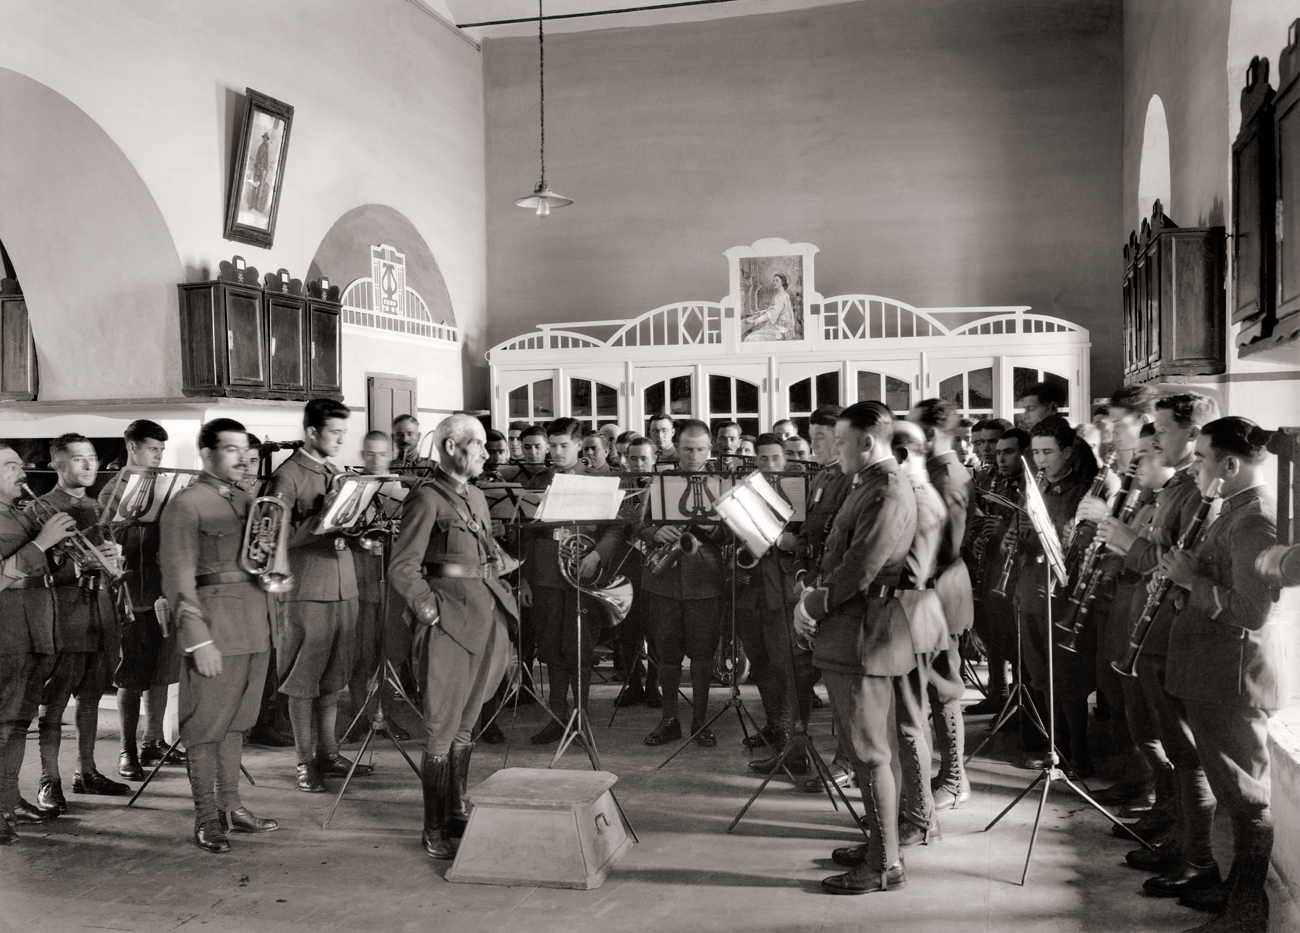 Sala de Música, Cuartel de Regulares González Tablas. Ceuta, 1929<br/>Gelatina de plata / Silver gelatin